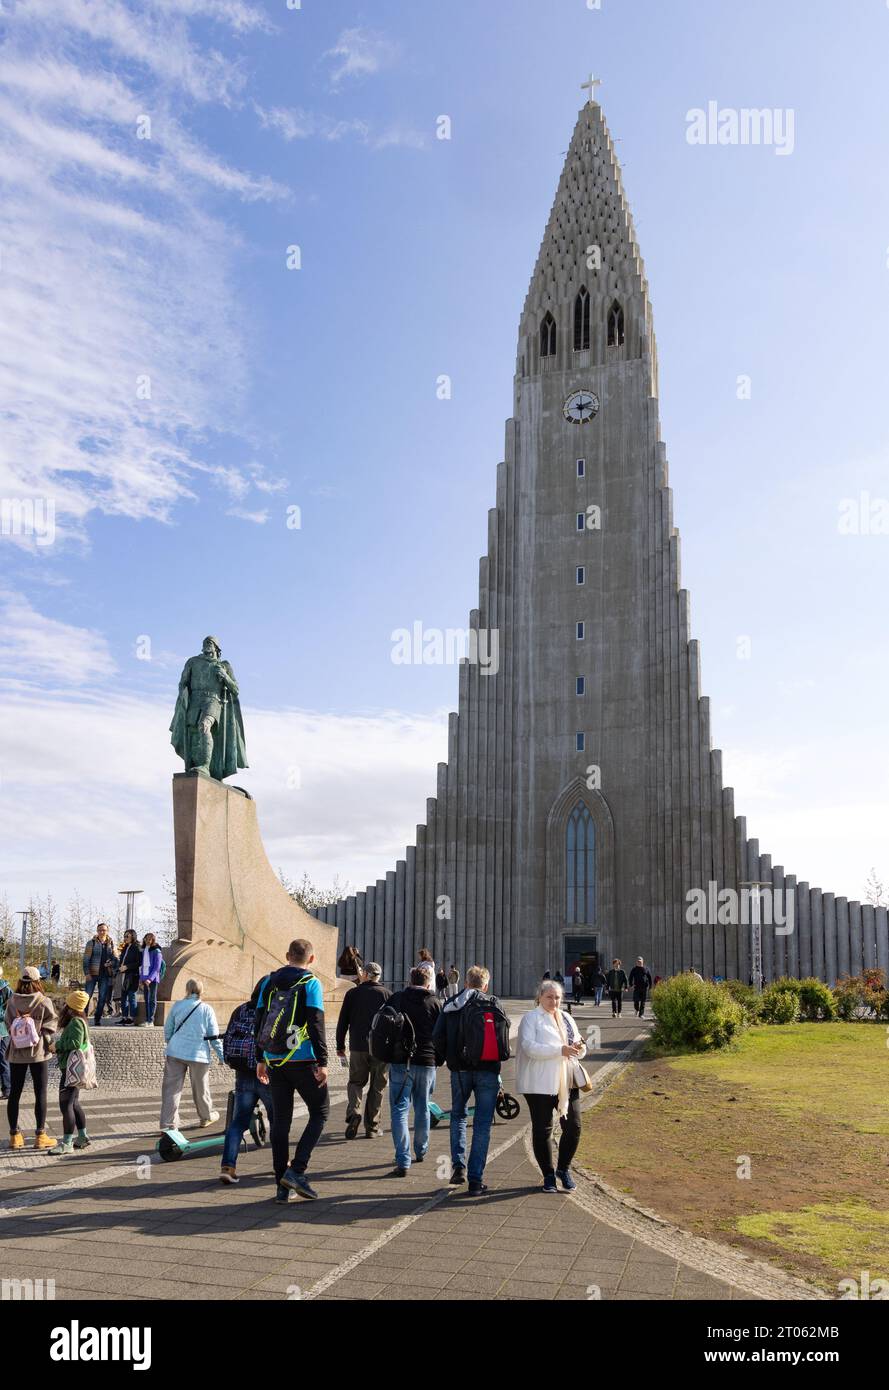 Iceland tourists at Reykjavik Cathedral or Hallgrímskirkja, and the statue of Leif Erikson, summer, Reykjavik Iceland Europe Stock Photo